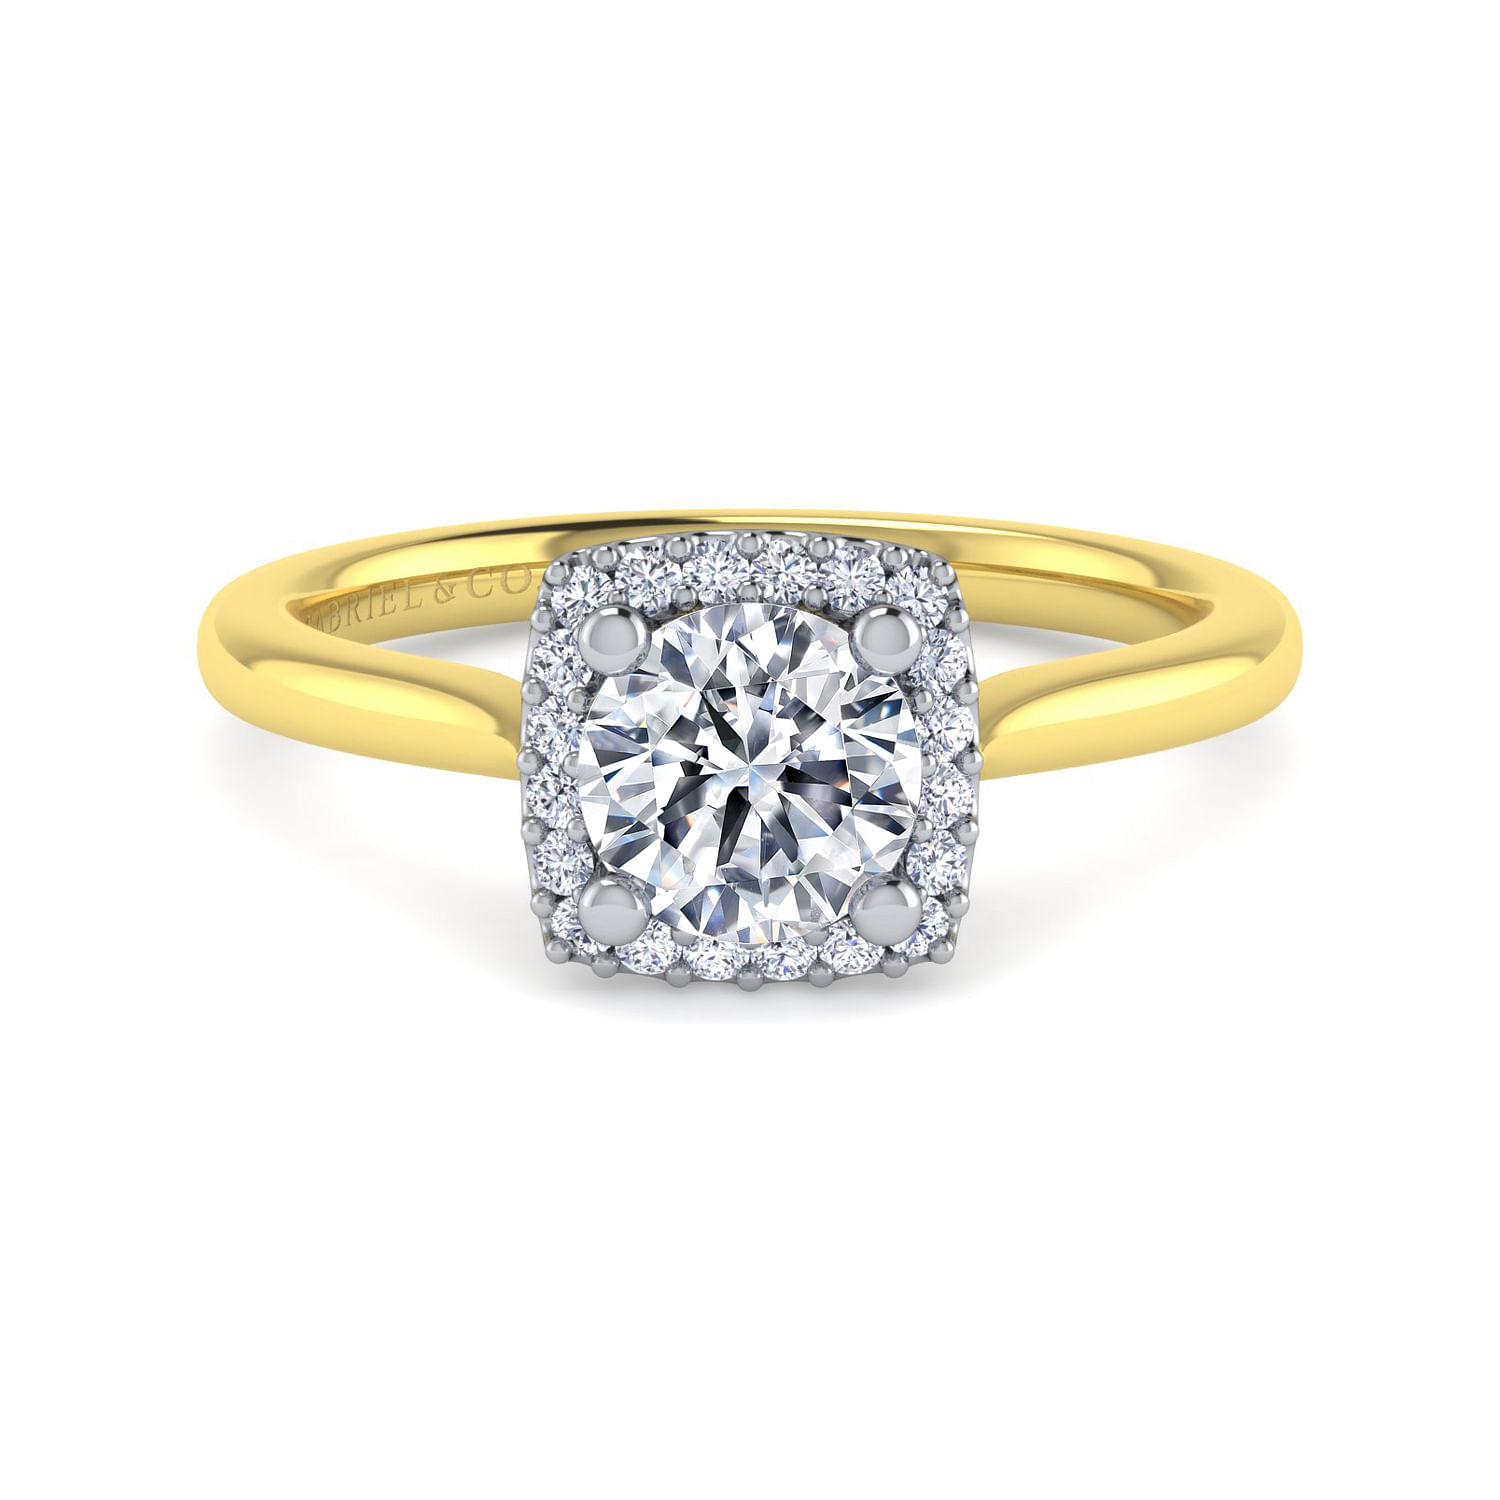 Jenna---14K-White-Yellow-Gold-Round-Halo-Diamond-Engagement-Ring1